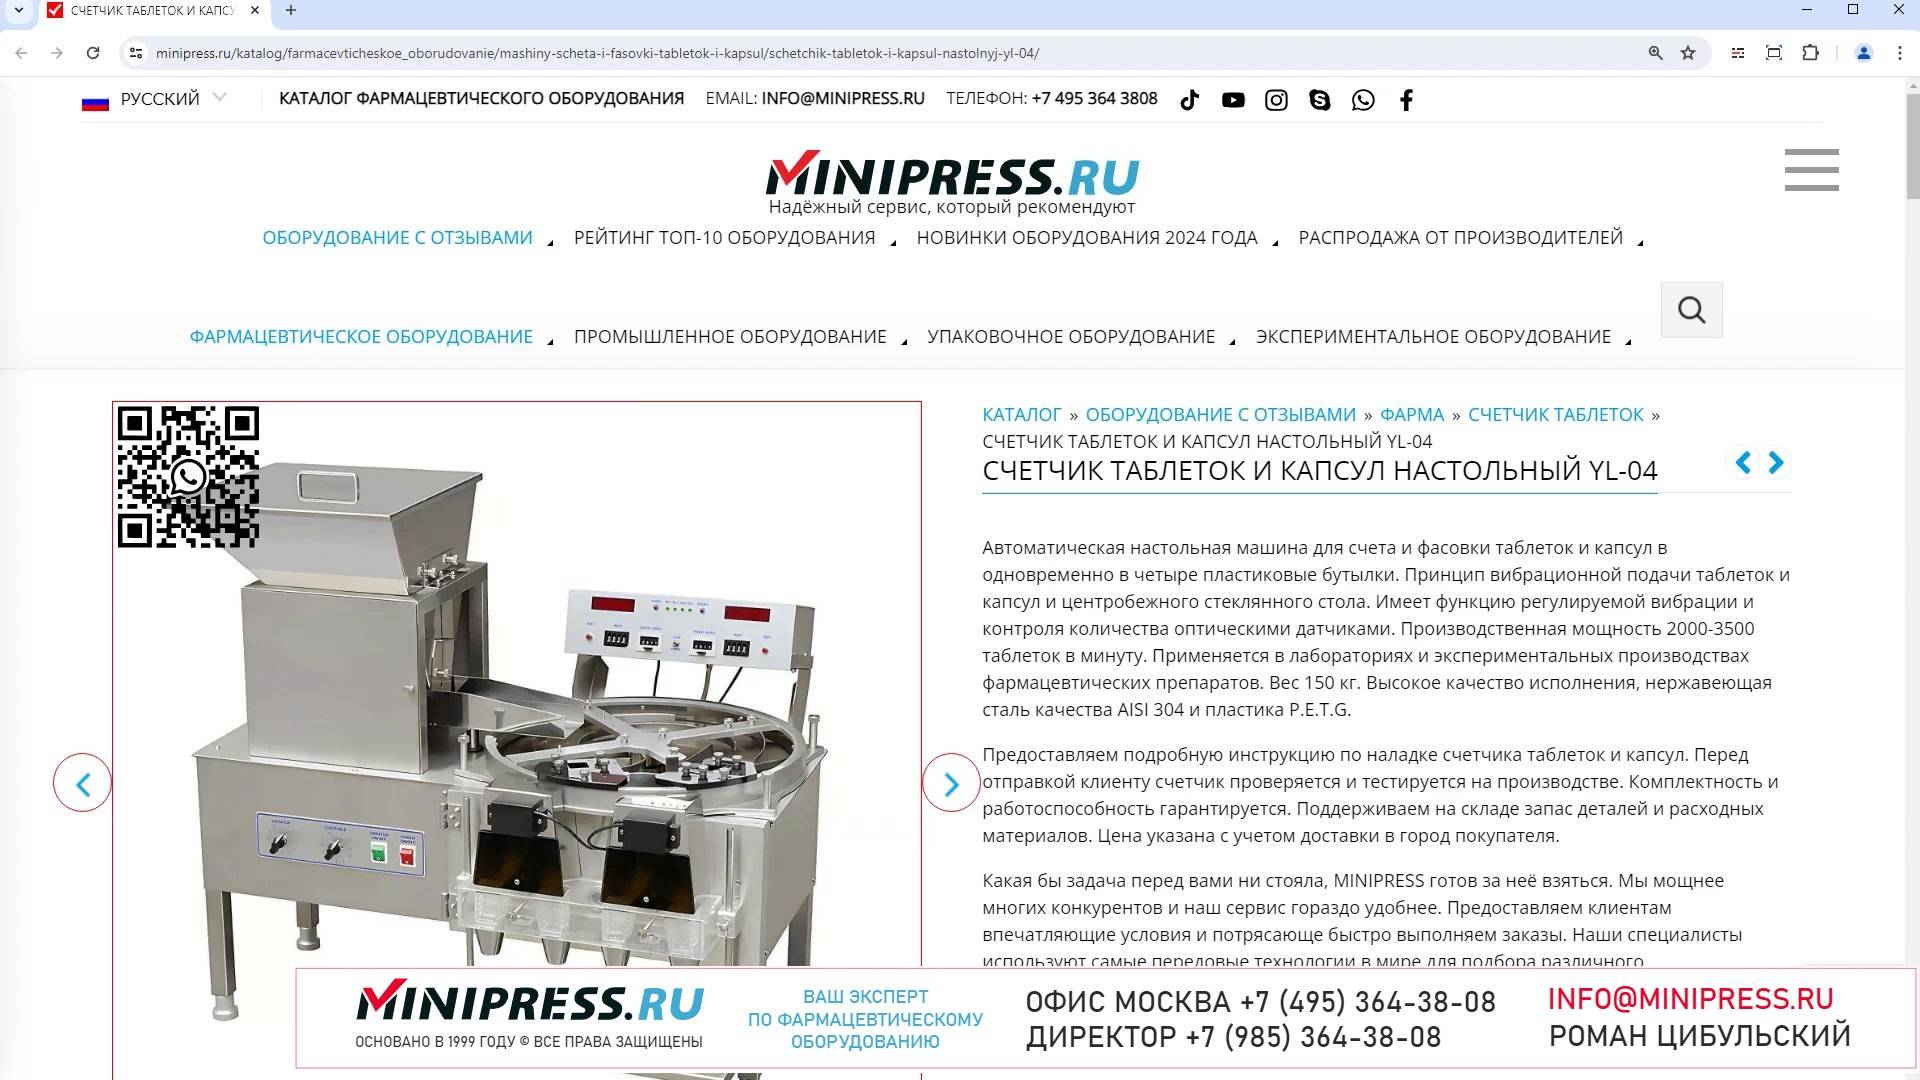 Minipress.ru Счетчик таблеток и капсул настольный YL-04